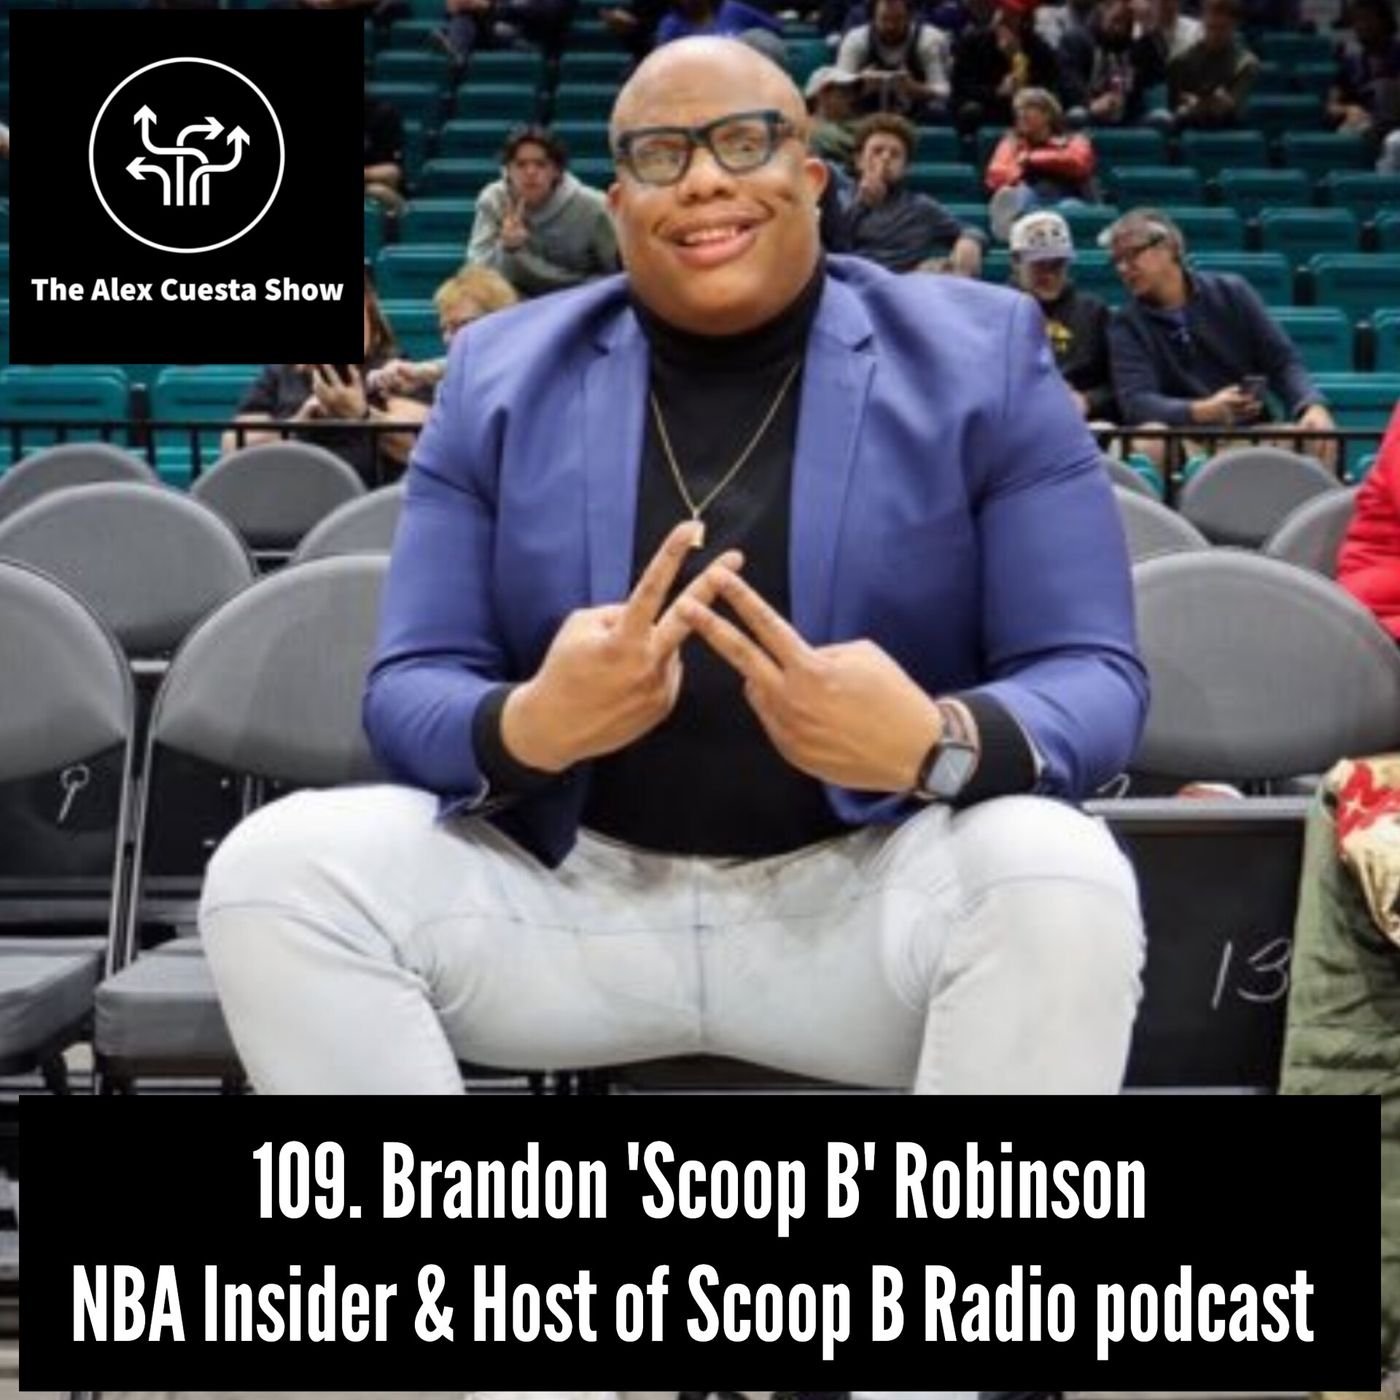 109. Brandon 'Scoop B' Robinson, NBA Insider and Host of Scoop B Radio podcast